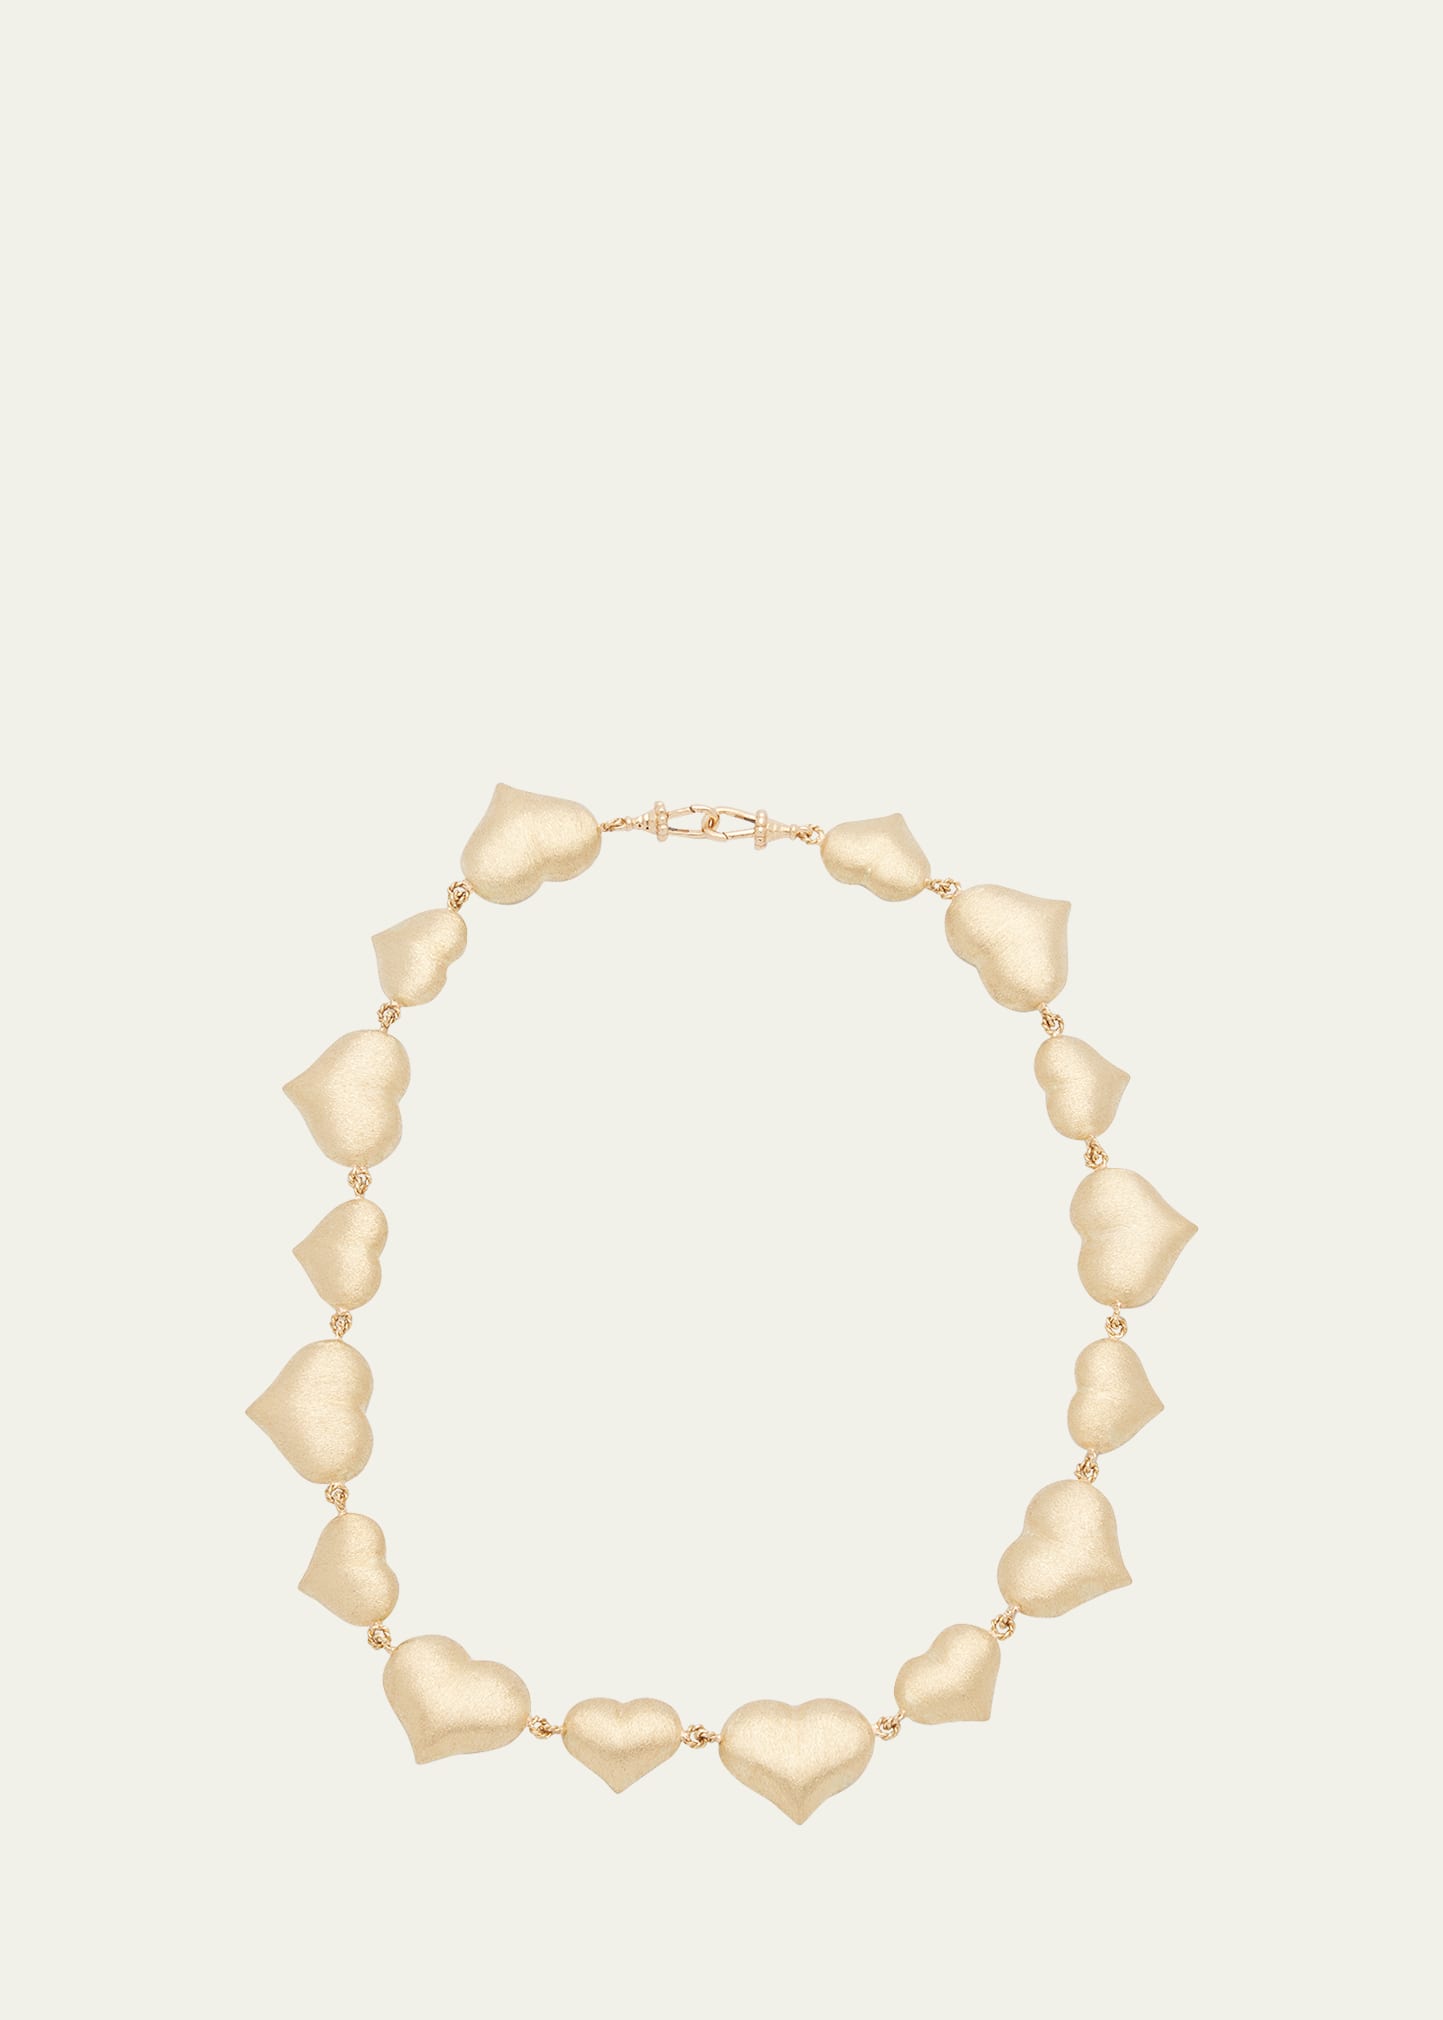 Marie Lichtenberg 14k Yellow Gold Heart Chain Necklace